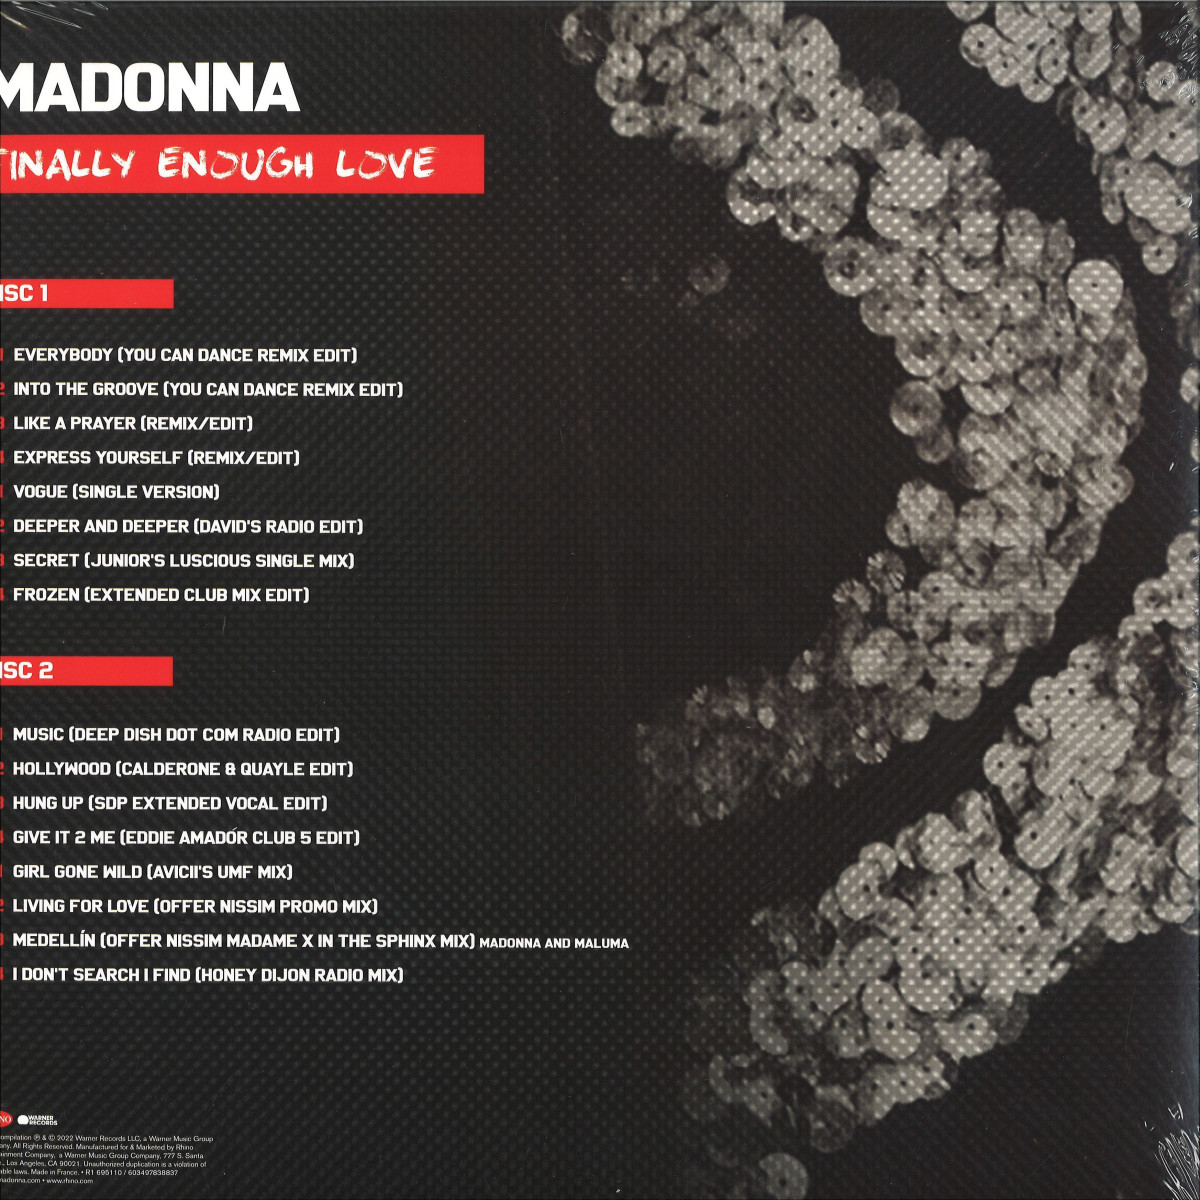 Madonna - Finally Enough Love LP 2x12" / Warner UK 0081227883621 - Vinyl